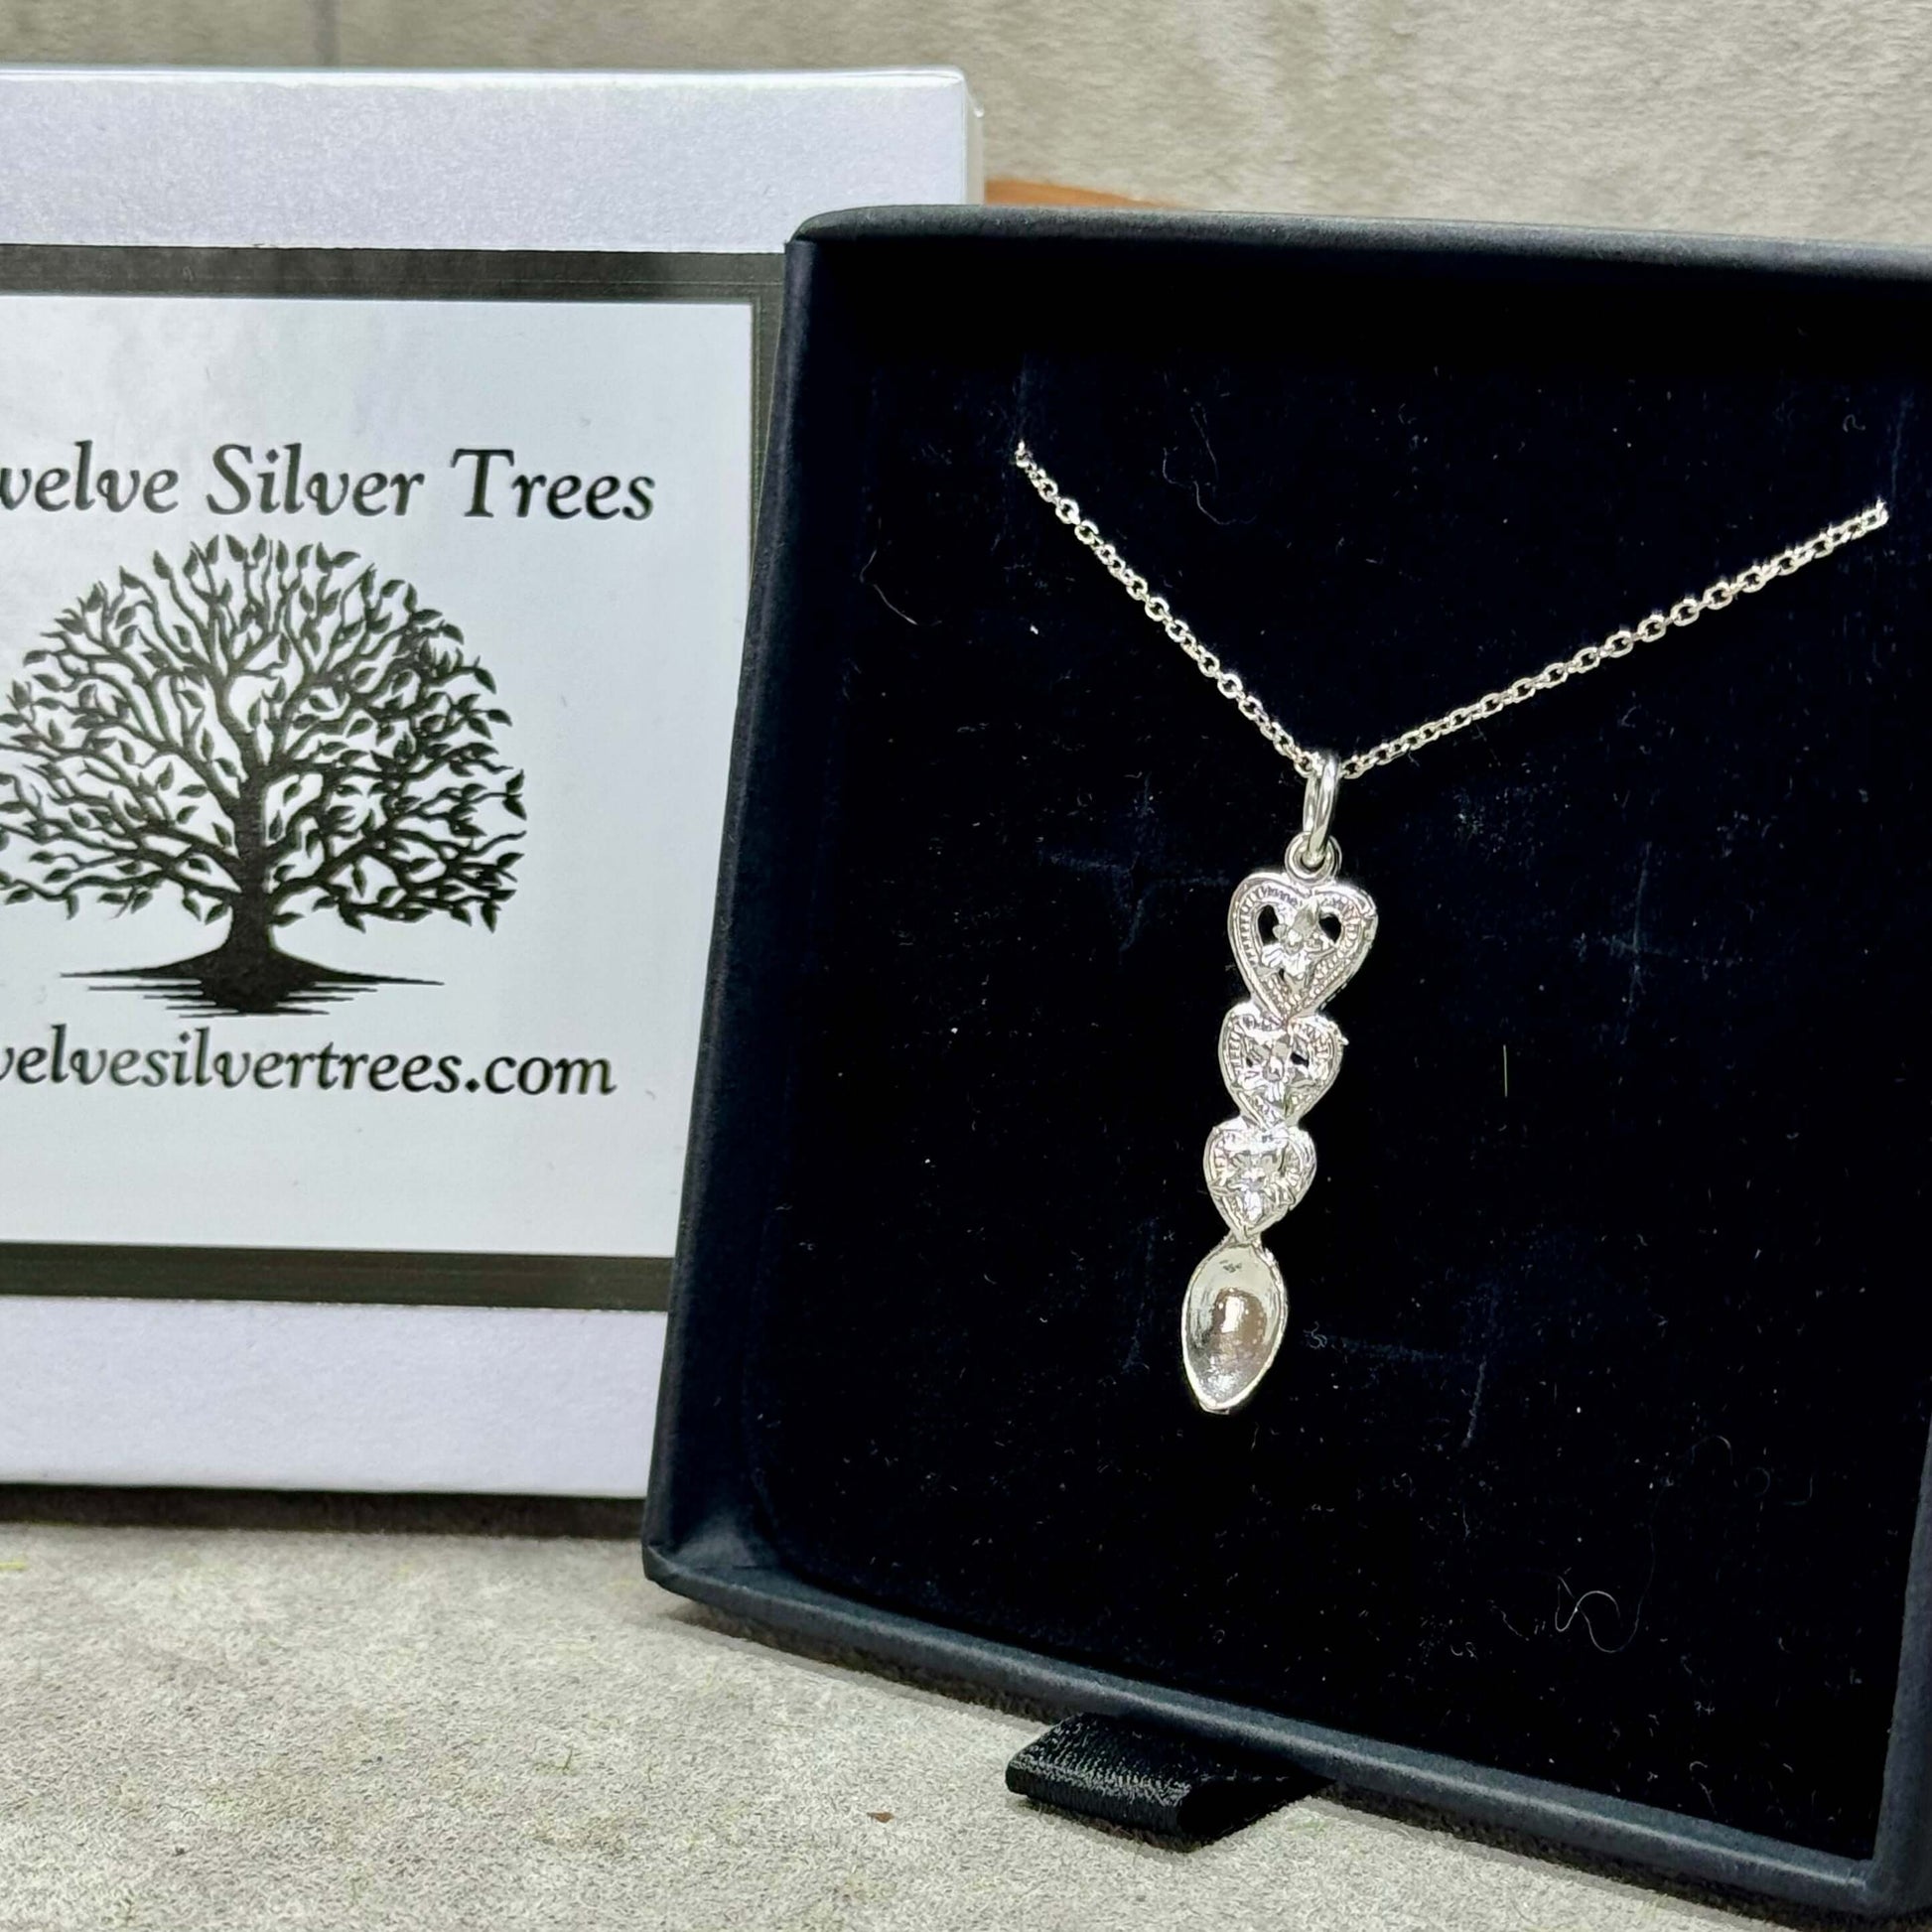 Welsh Love Spoon Daffodil Sterling Silver Pendant - Twelve Silver Trees